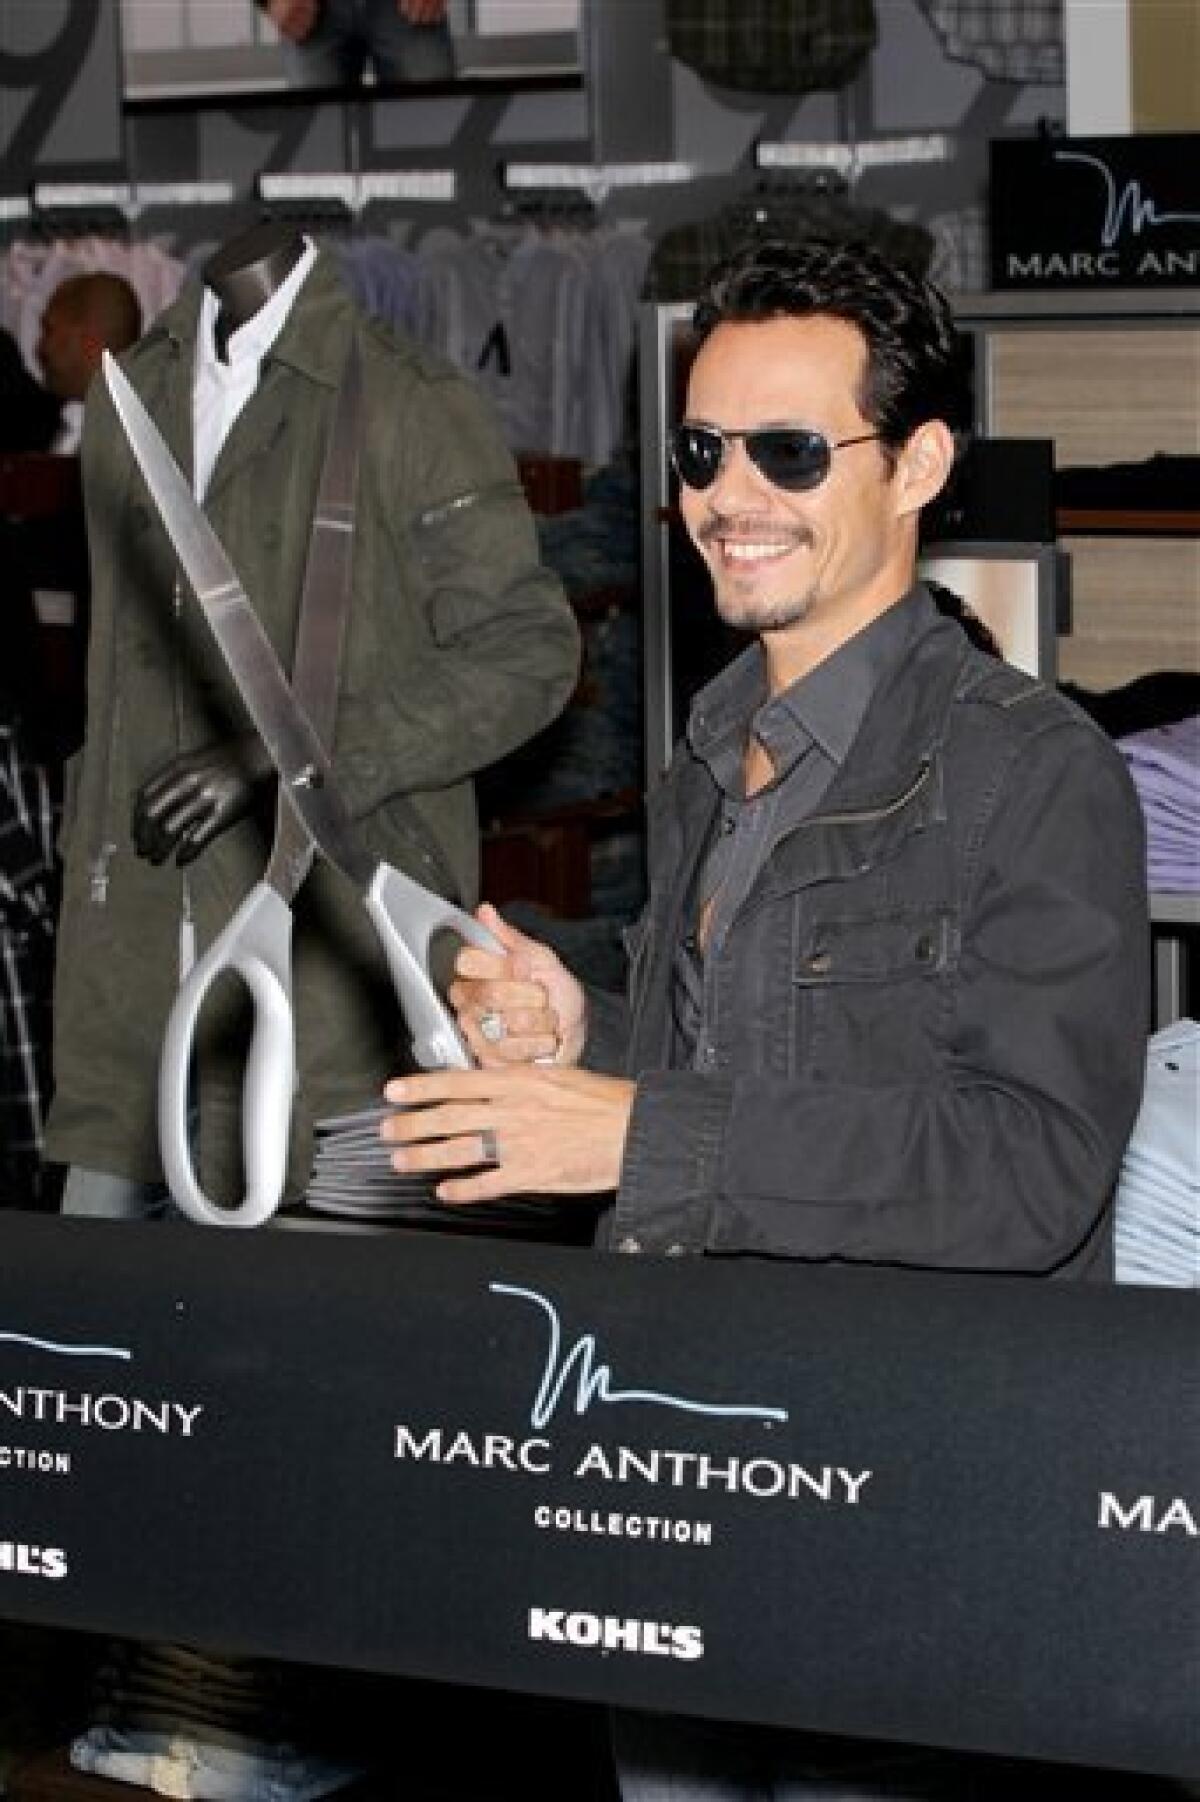 Marc Anthony, J. Lo launch fashion lines at Kohl's - The San Diego  Union-Tribune